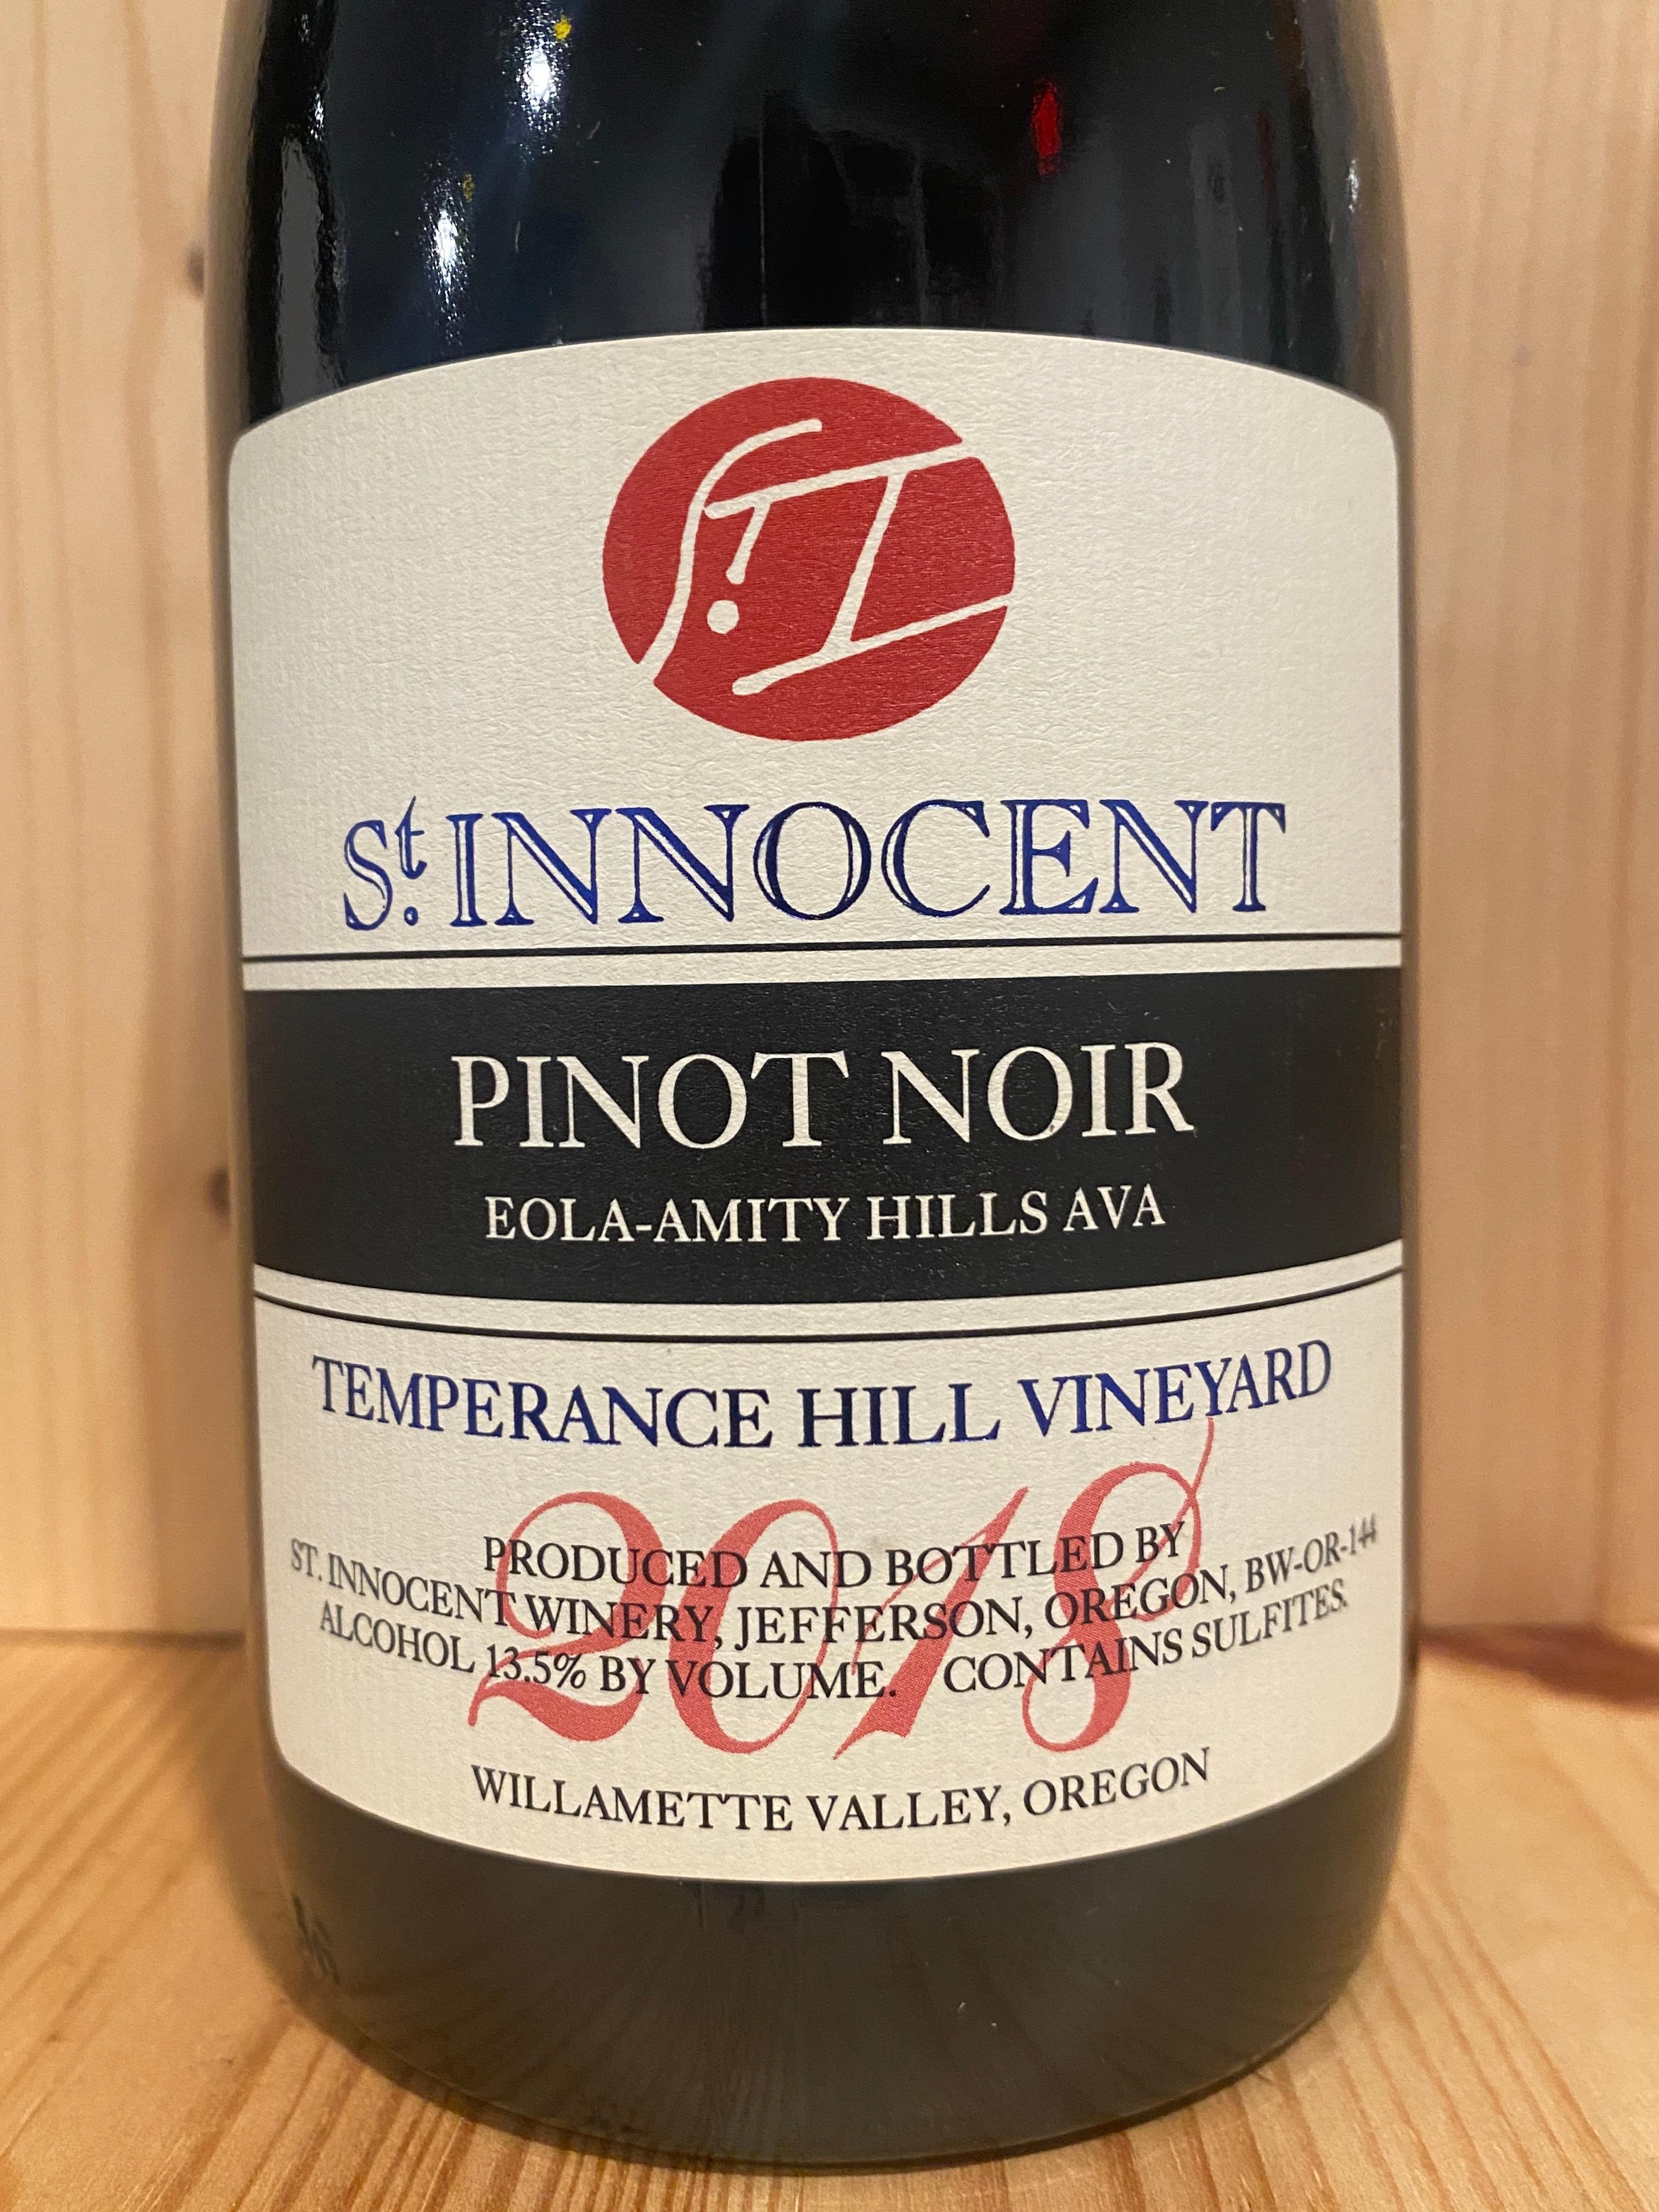 St. Innocent Temperance Hill Vineyard Pinot Noir 2018: Eola-Amity Hills, Willamette Valley, Oregon